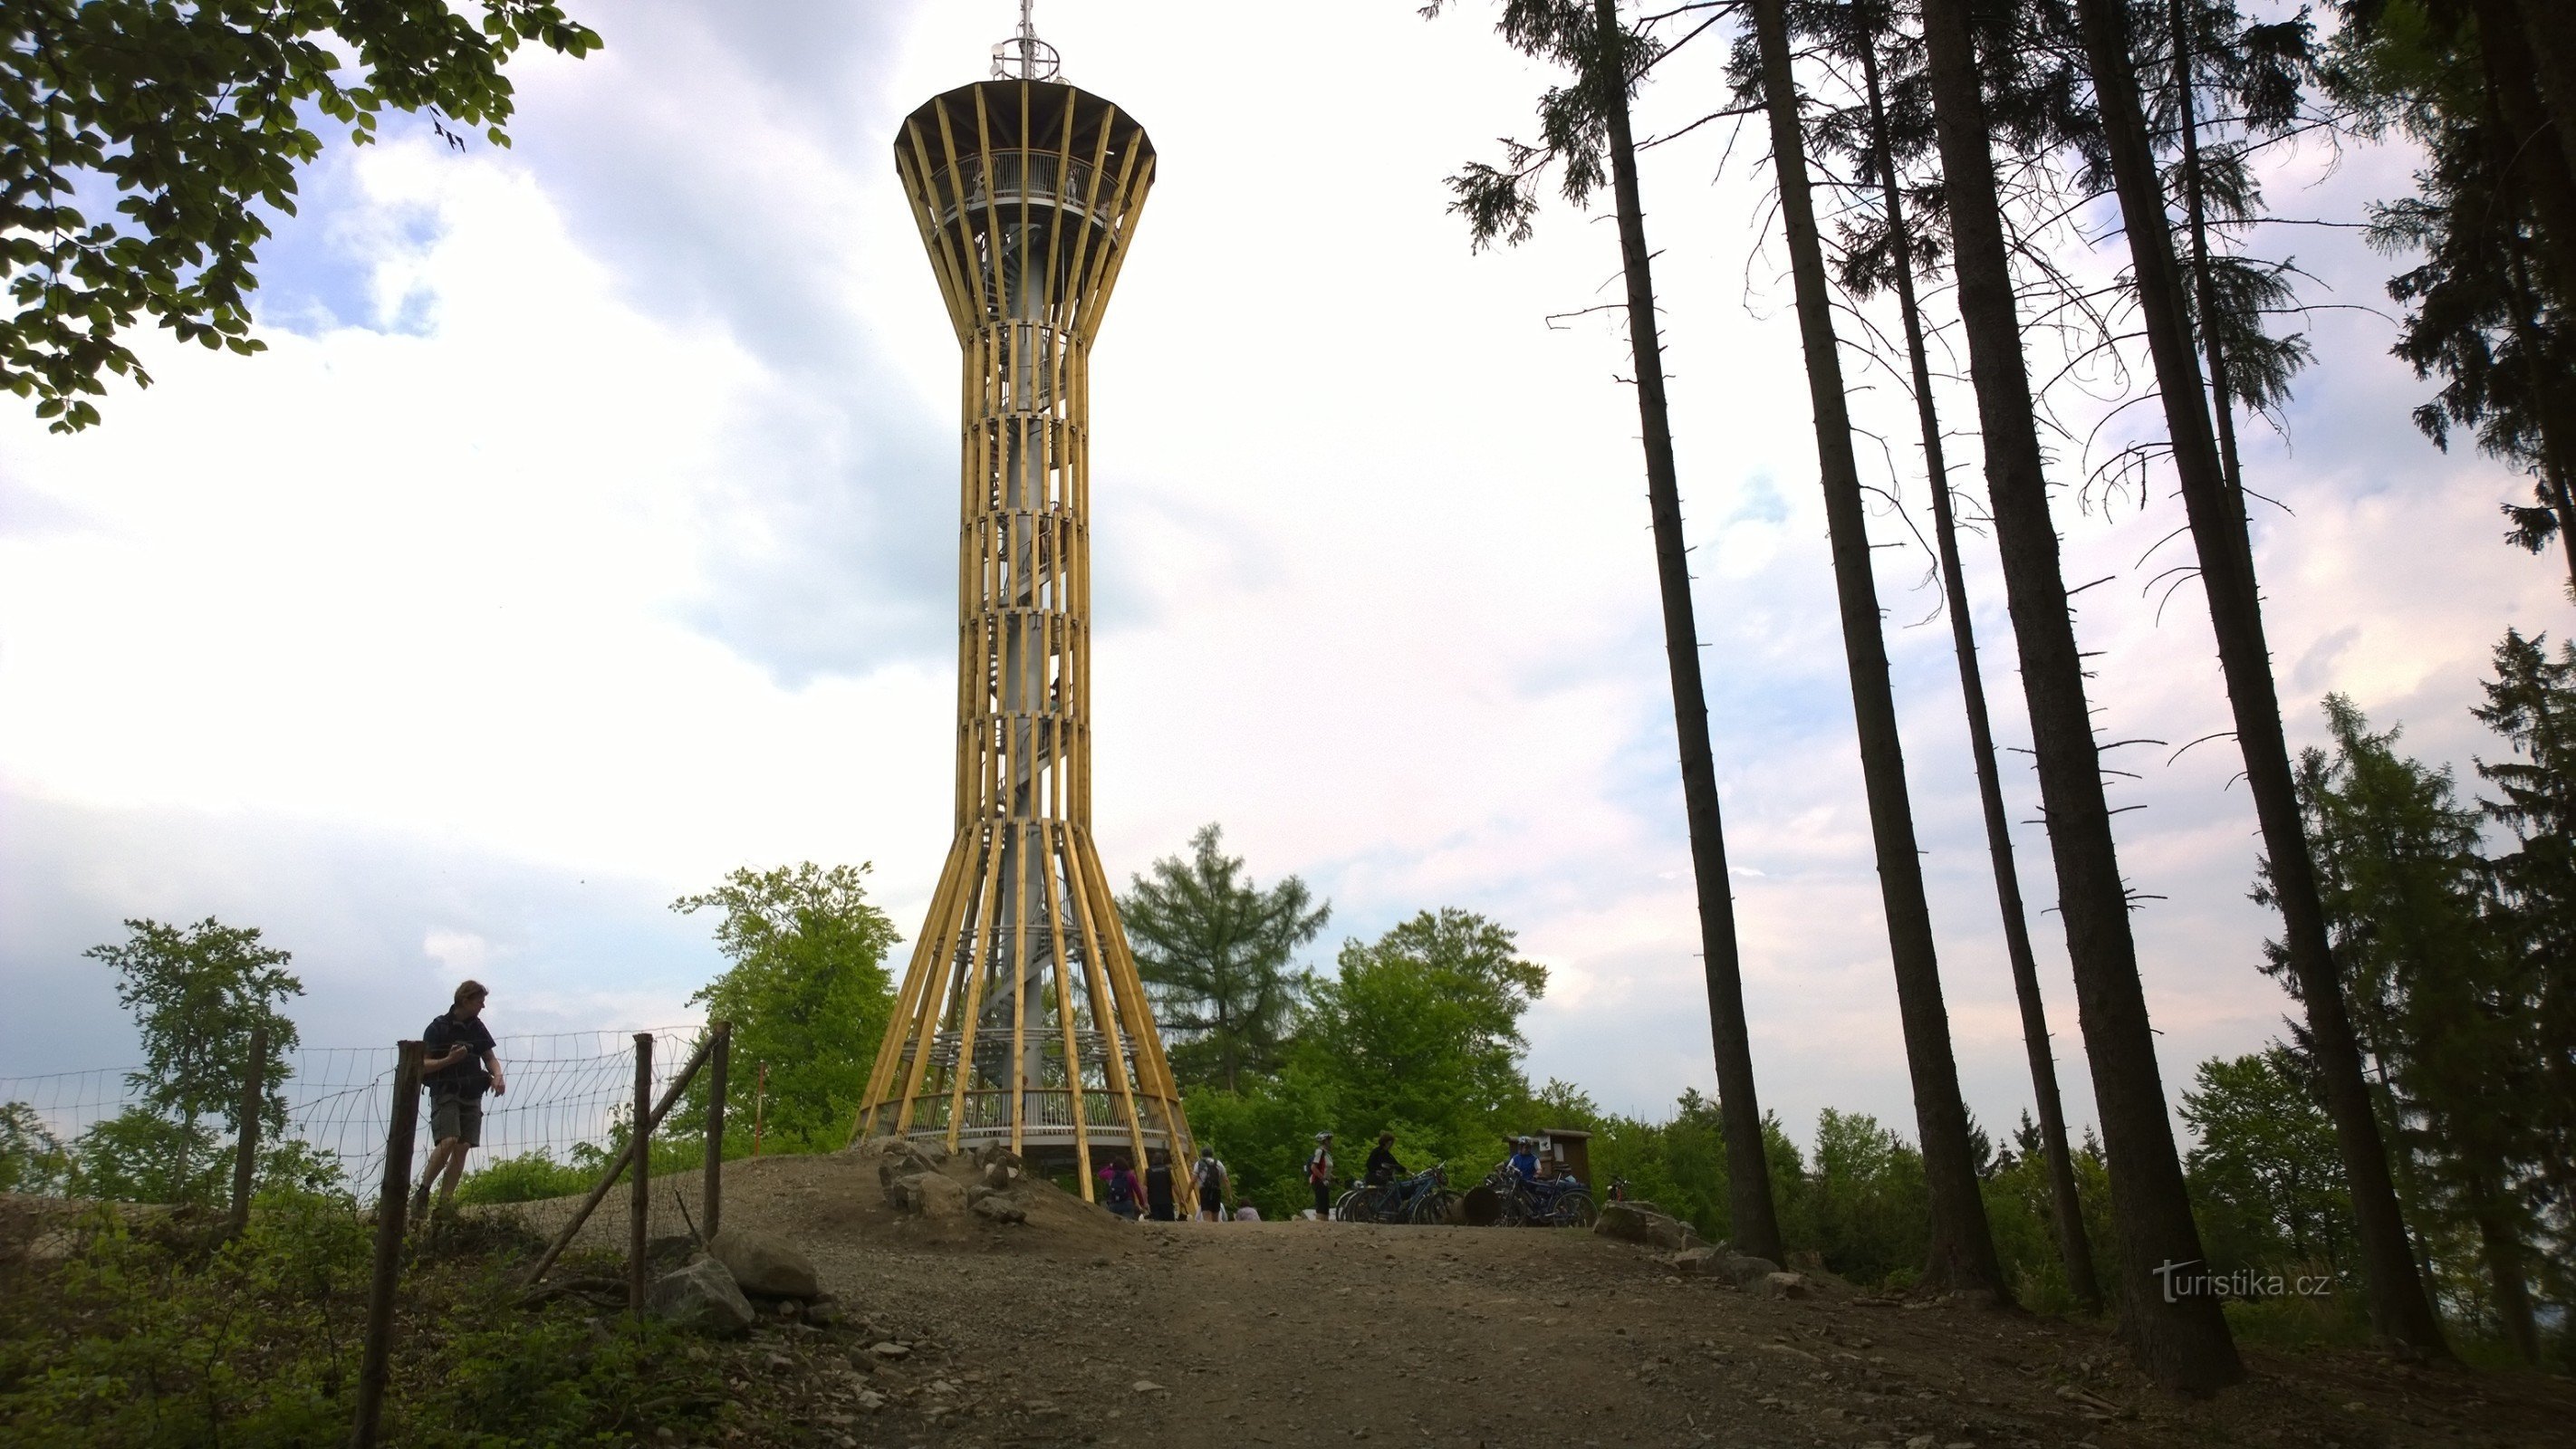 Špulka lookout tower near Lbosín